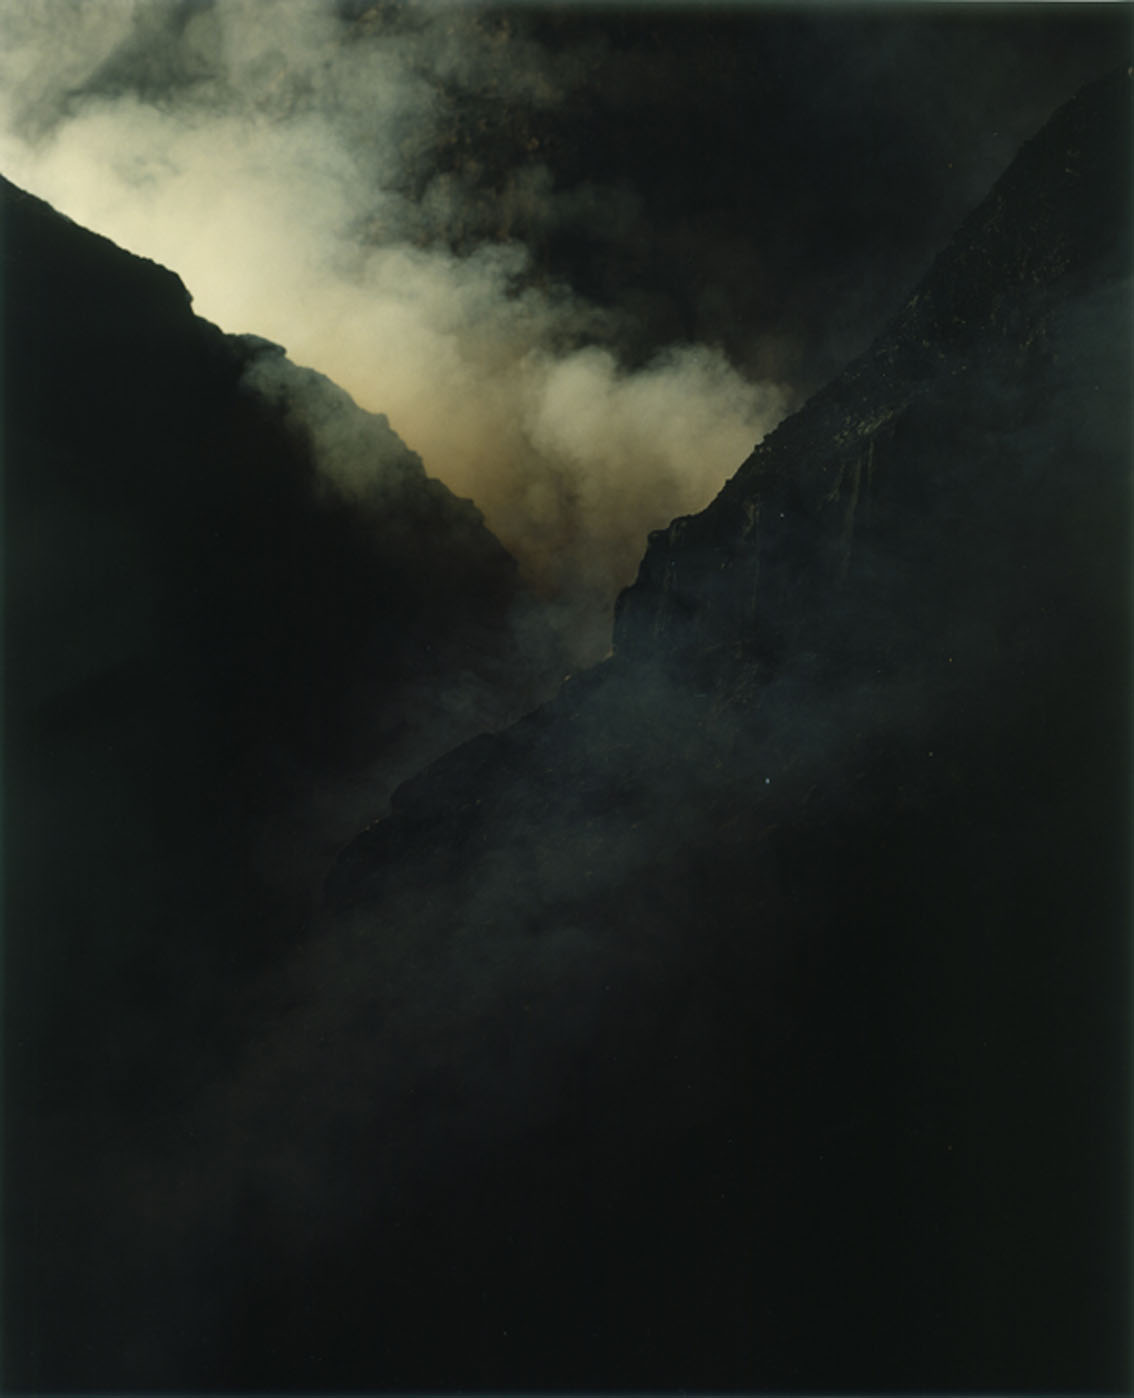 Sonja Braas, Wildfire, 2005
C-print diasec, wood frame
185 x 155 cm
Edition of 8 + 2 AP